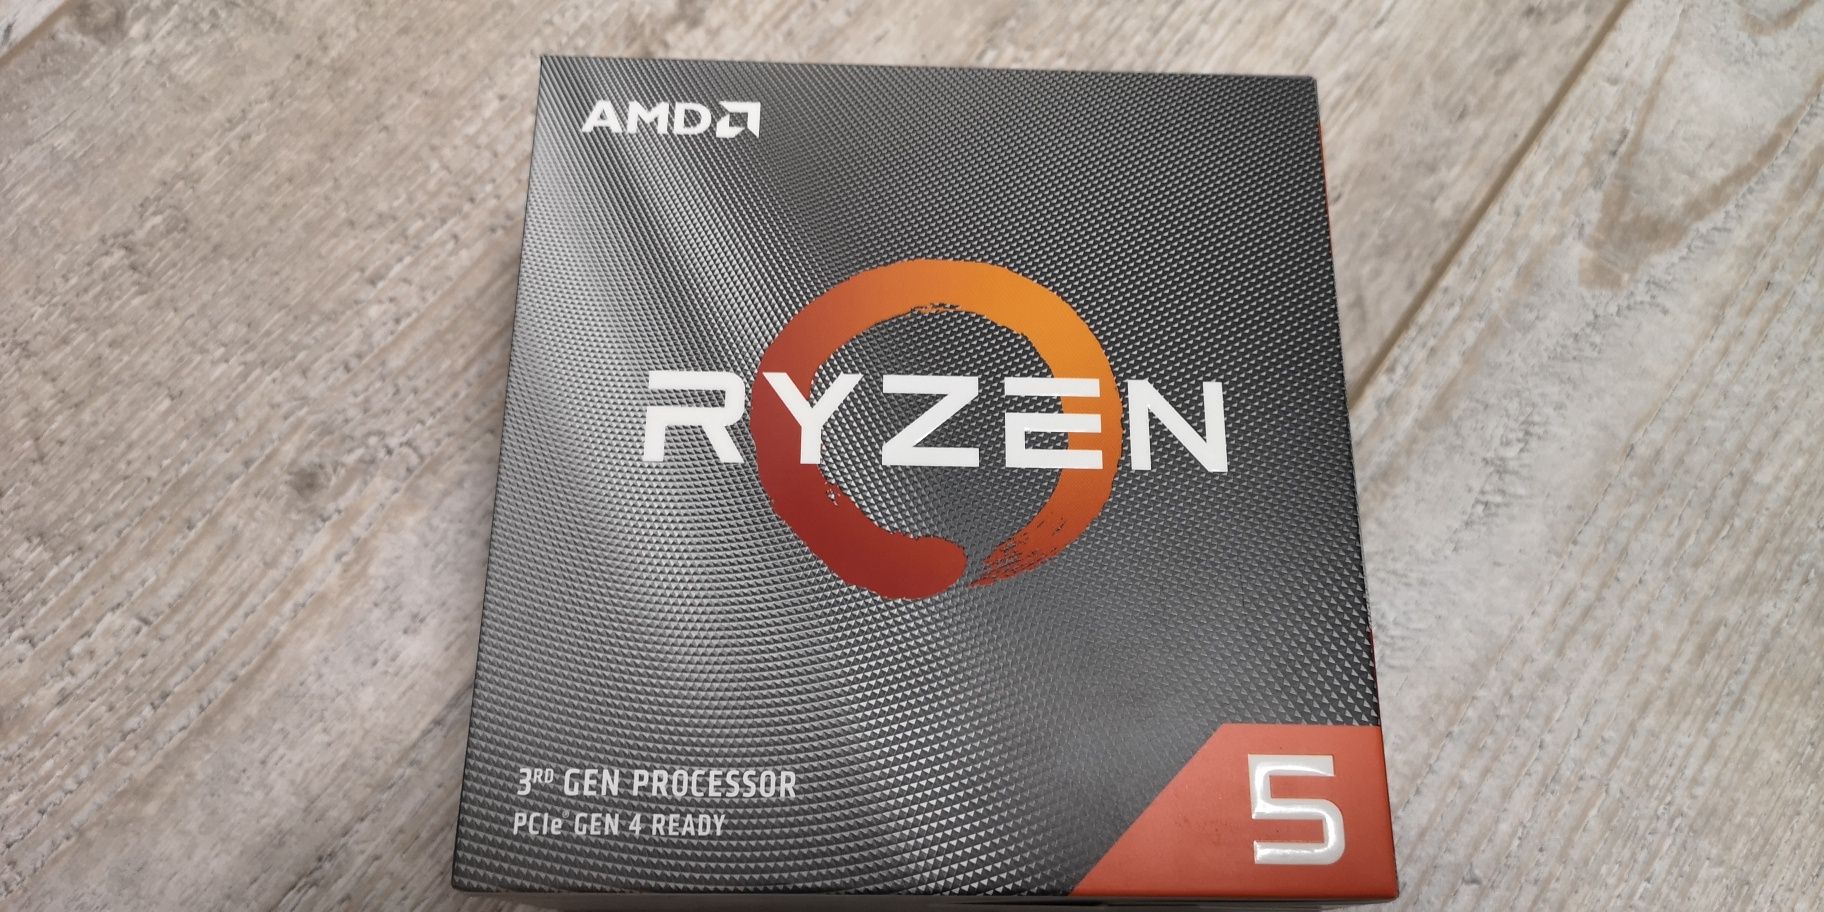 AMD Ryzen 5 3500x.